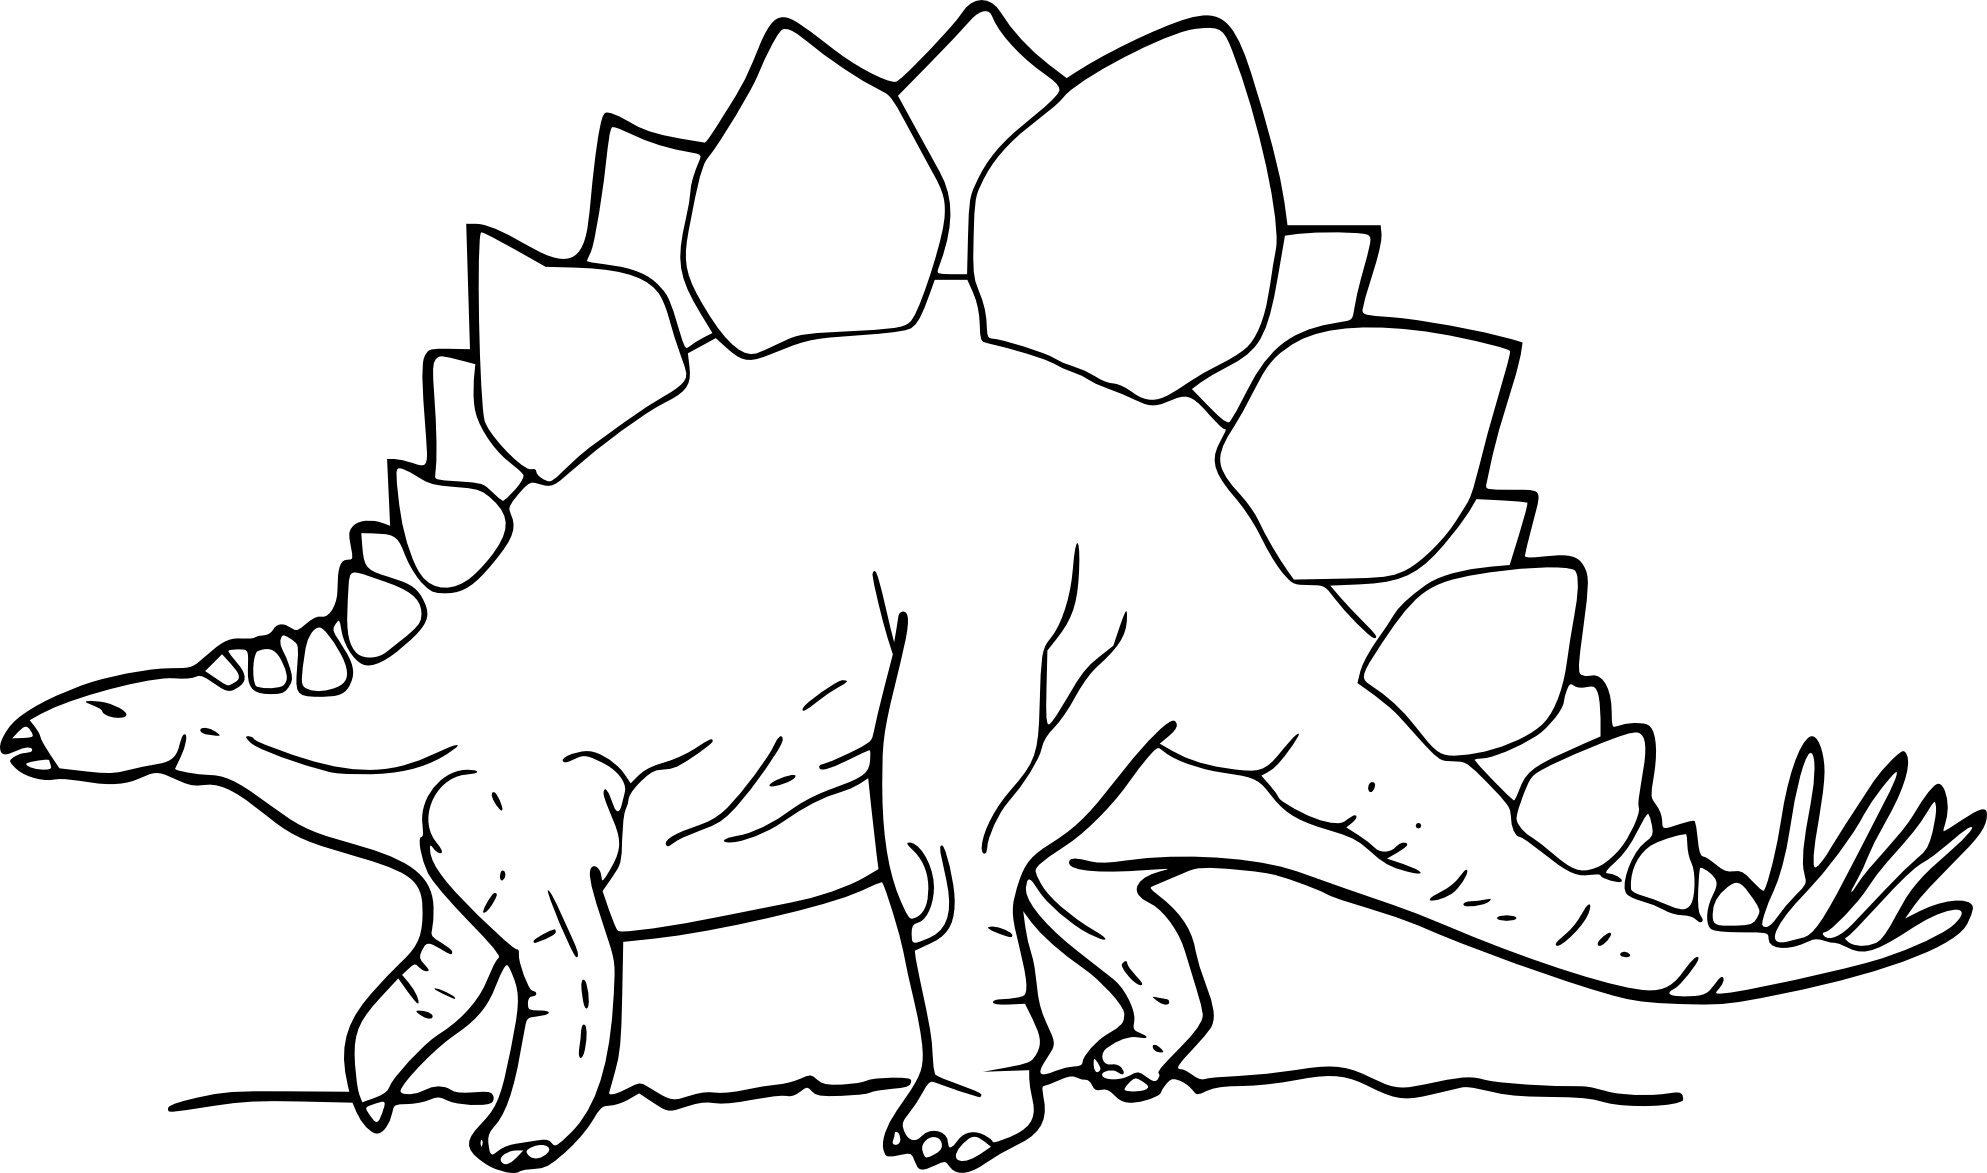 Dinosaur Stegosaurus coloring page